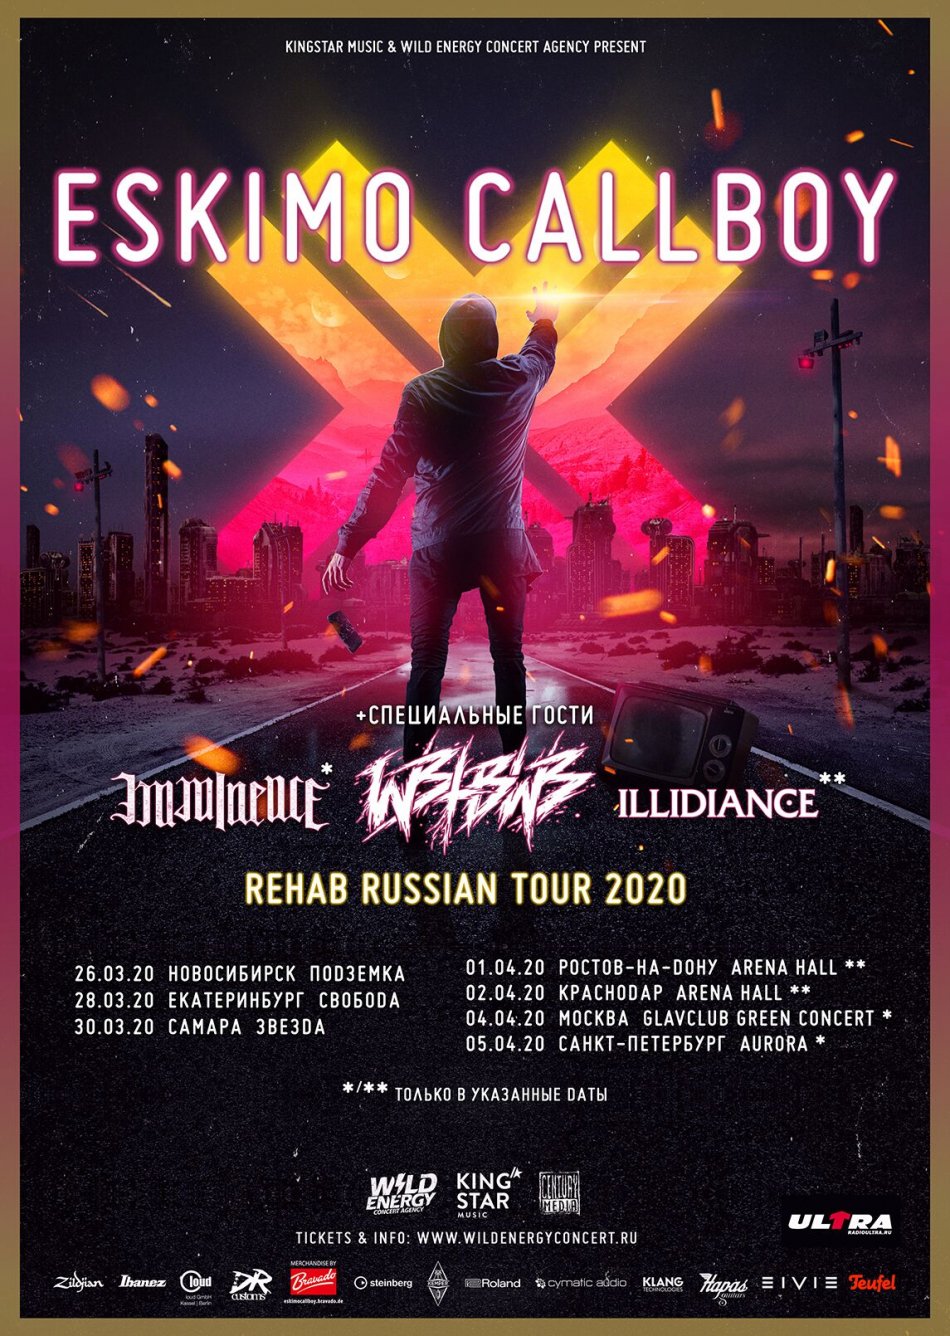 ESKIMO CALLBOY + WBTBWB RUSSIAN TOUR 2020